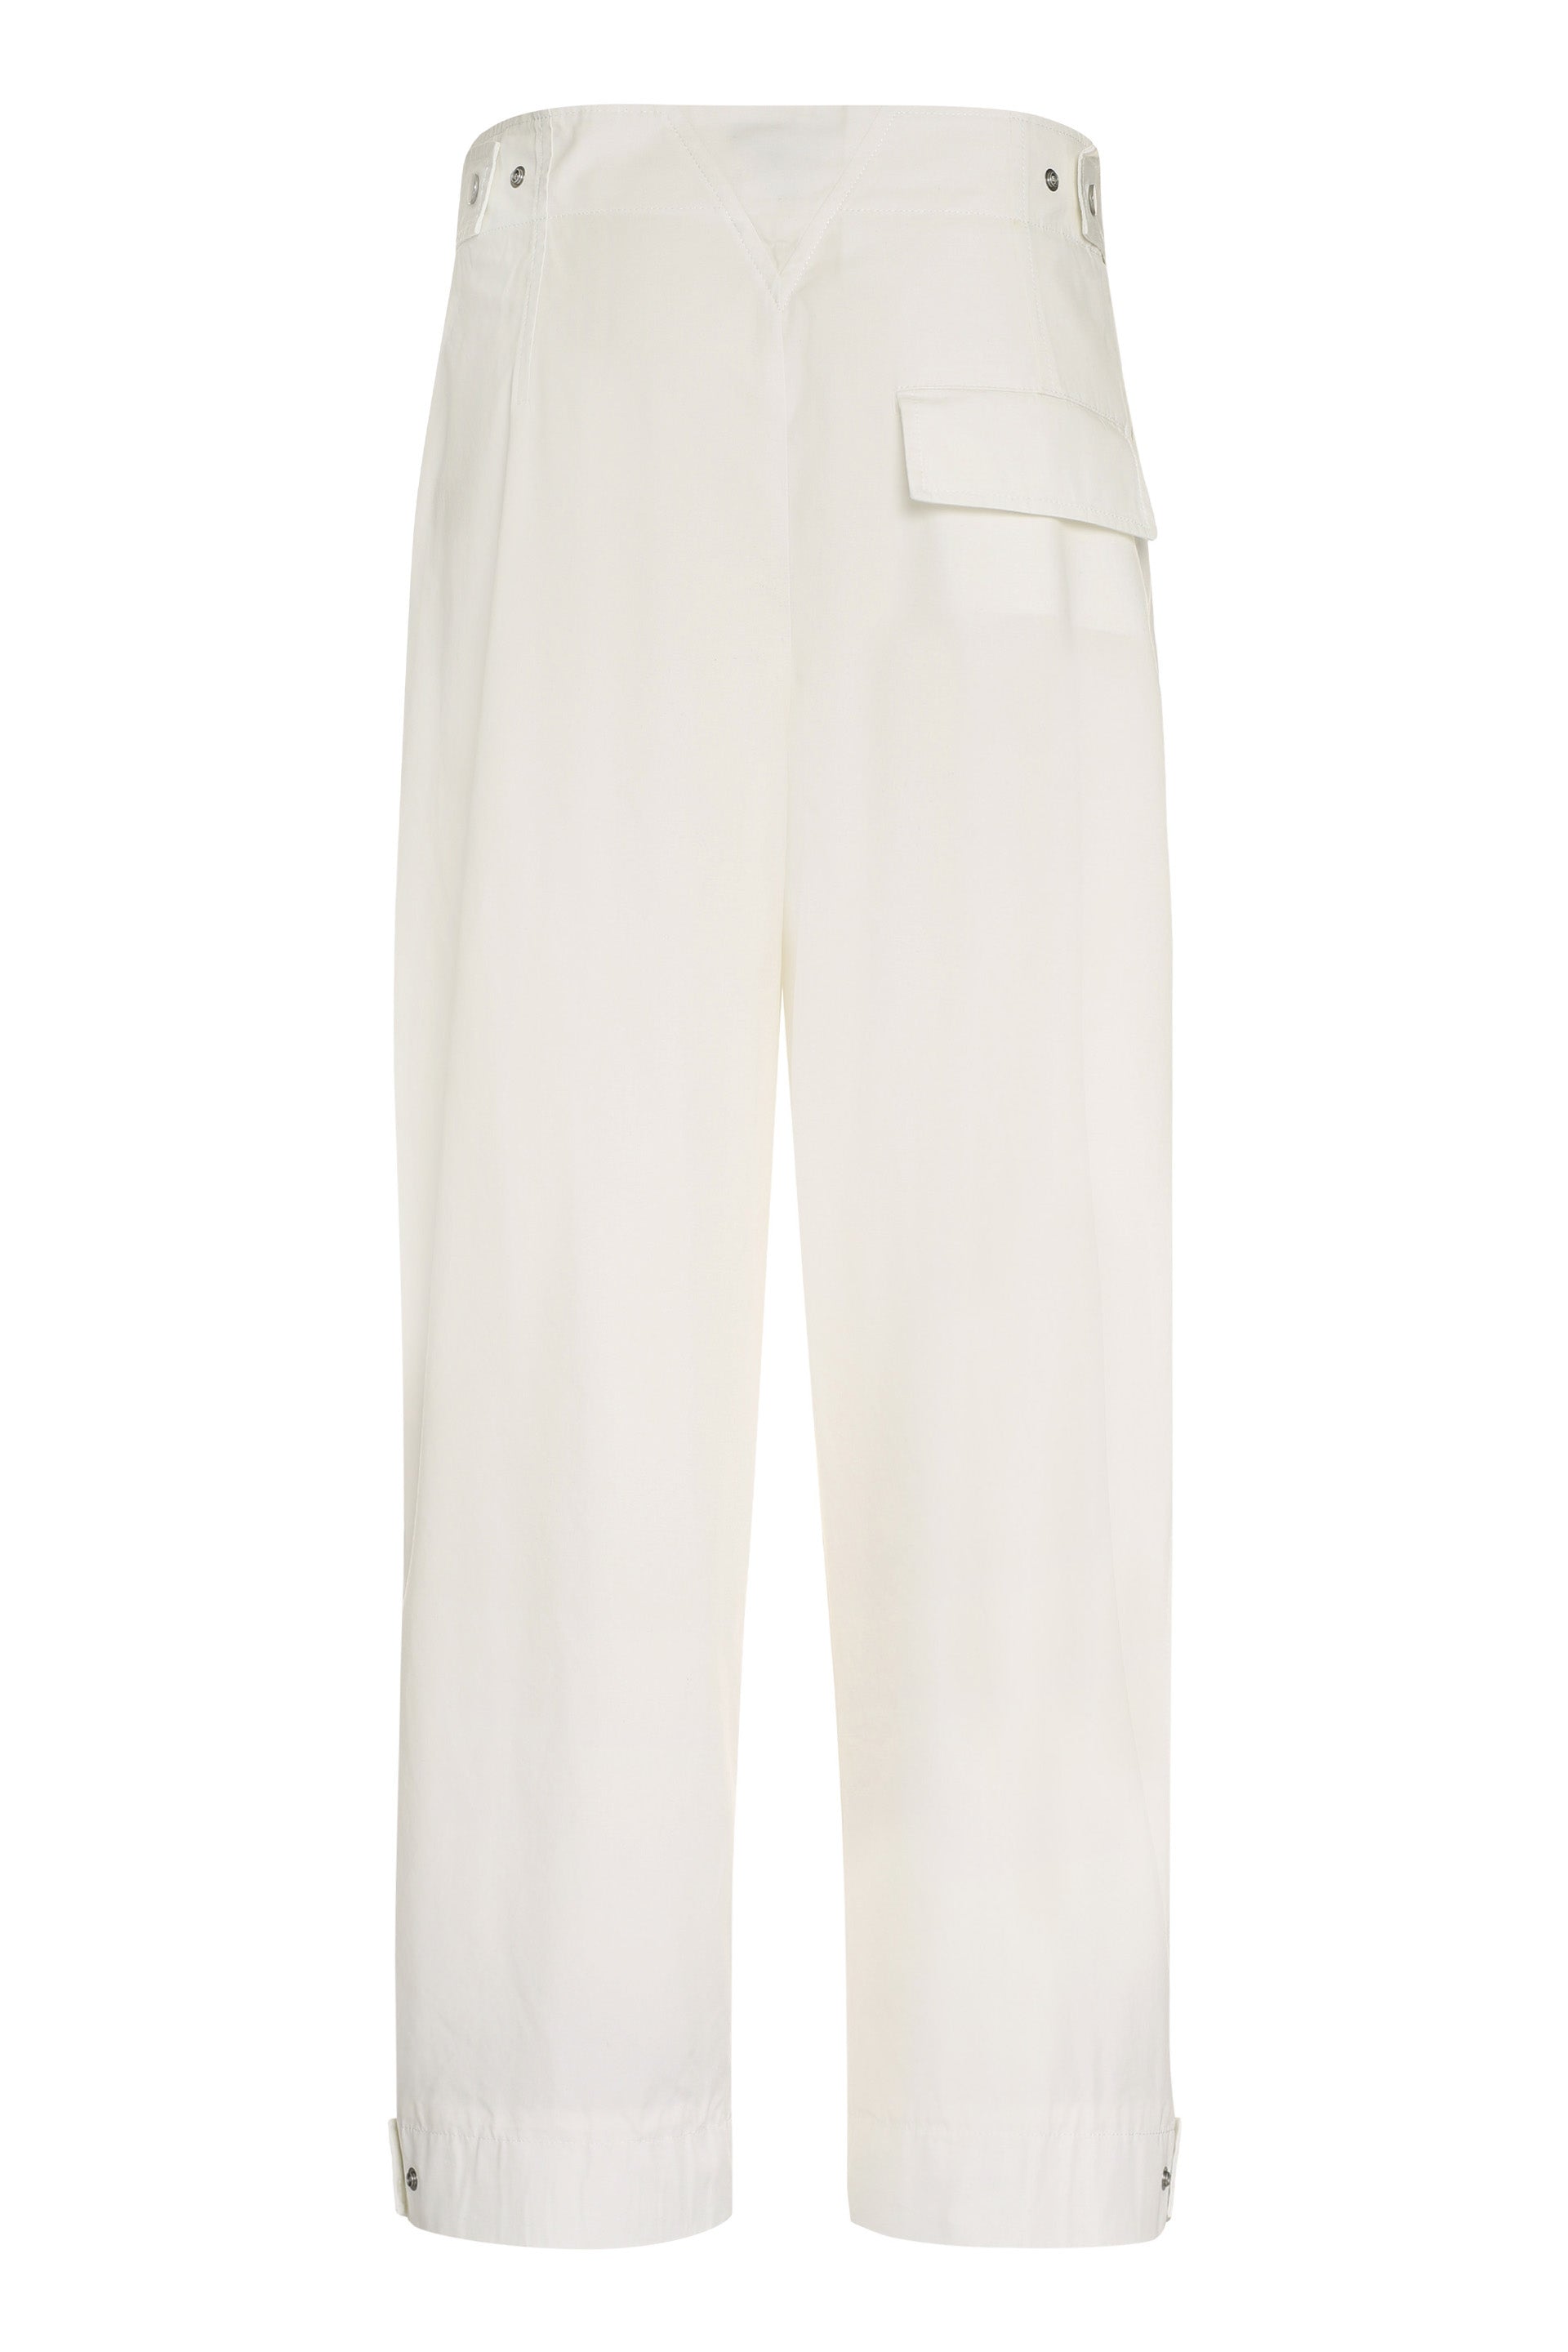 Shop Bottega Veneta White Cotton Trousers For Women